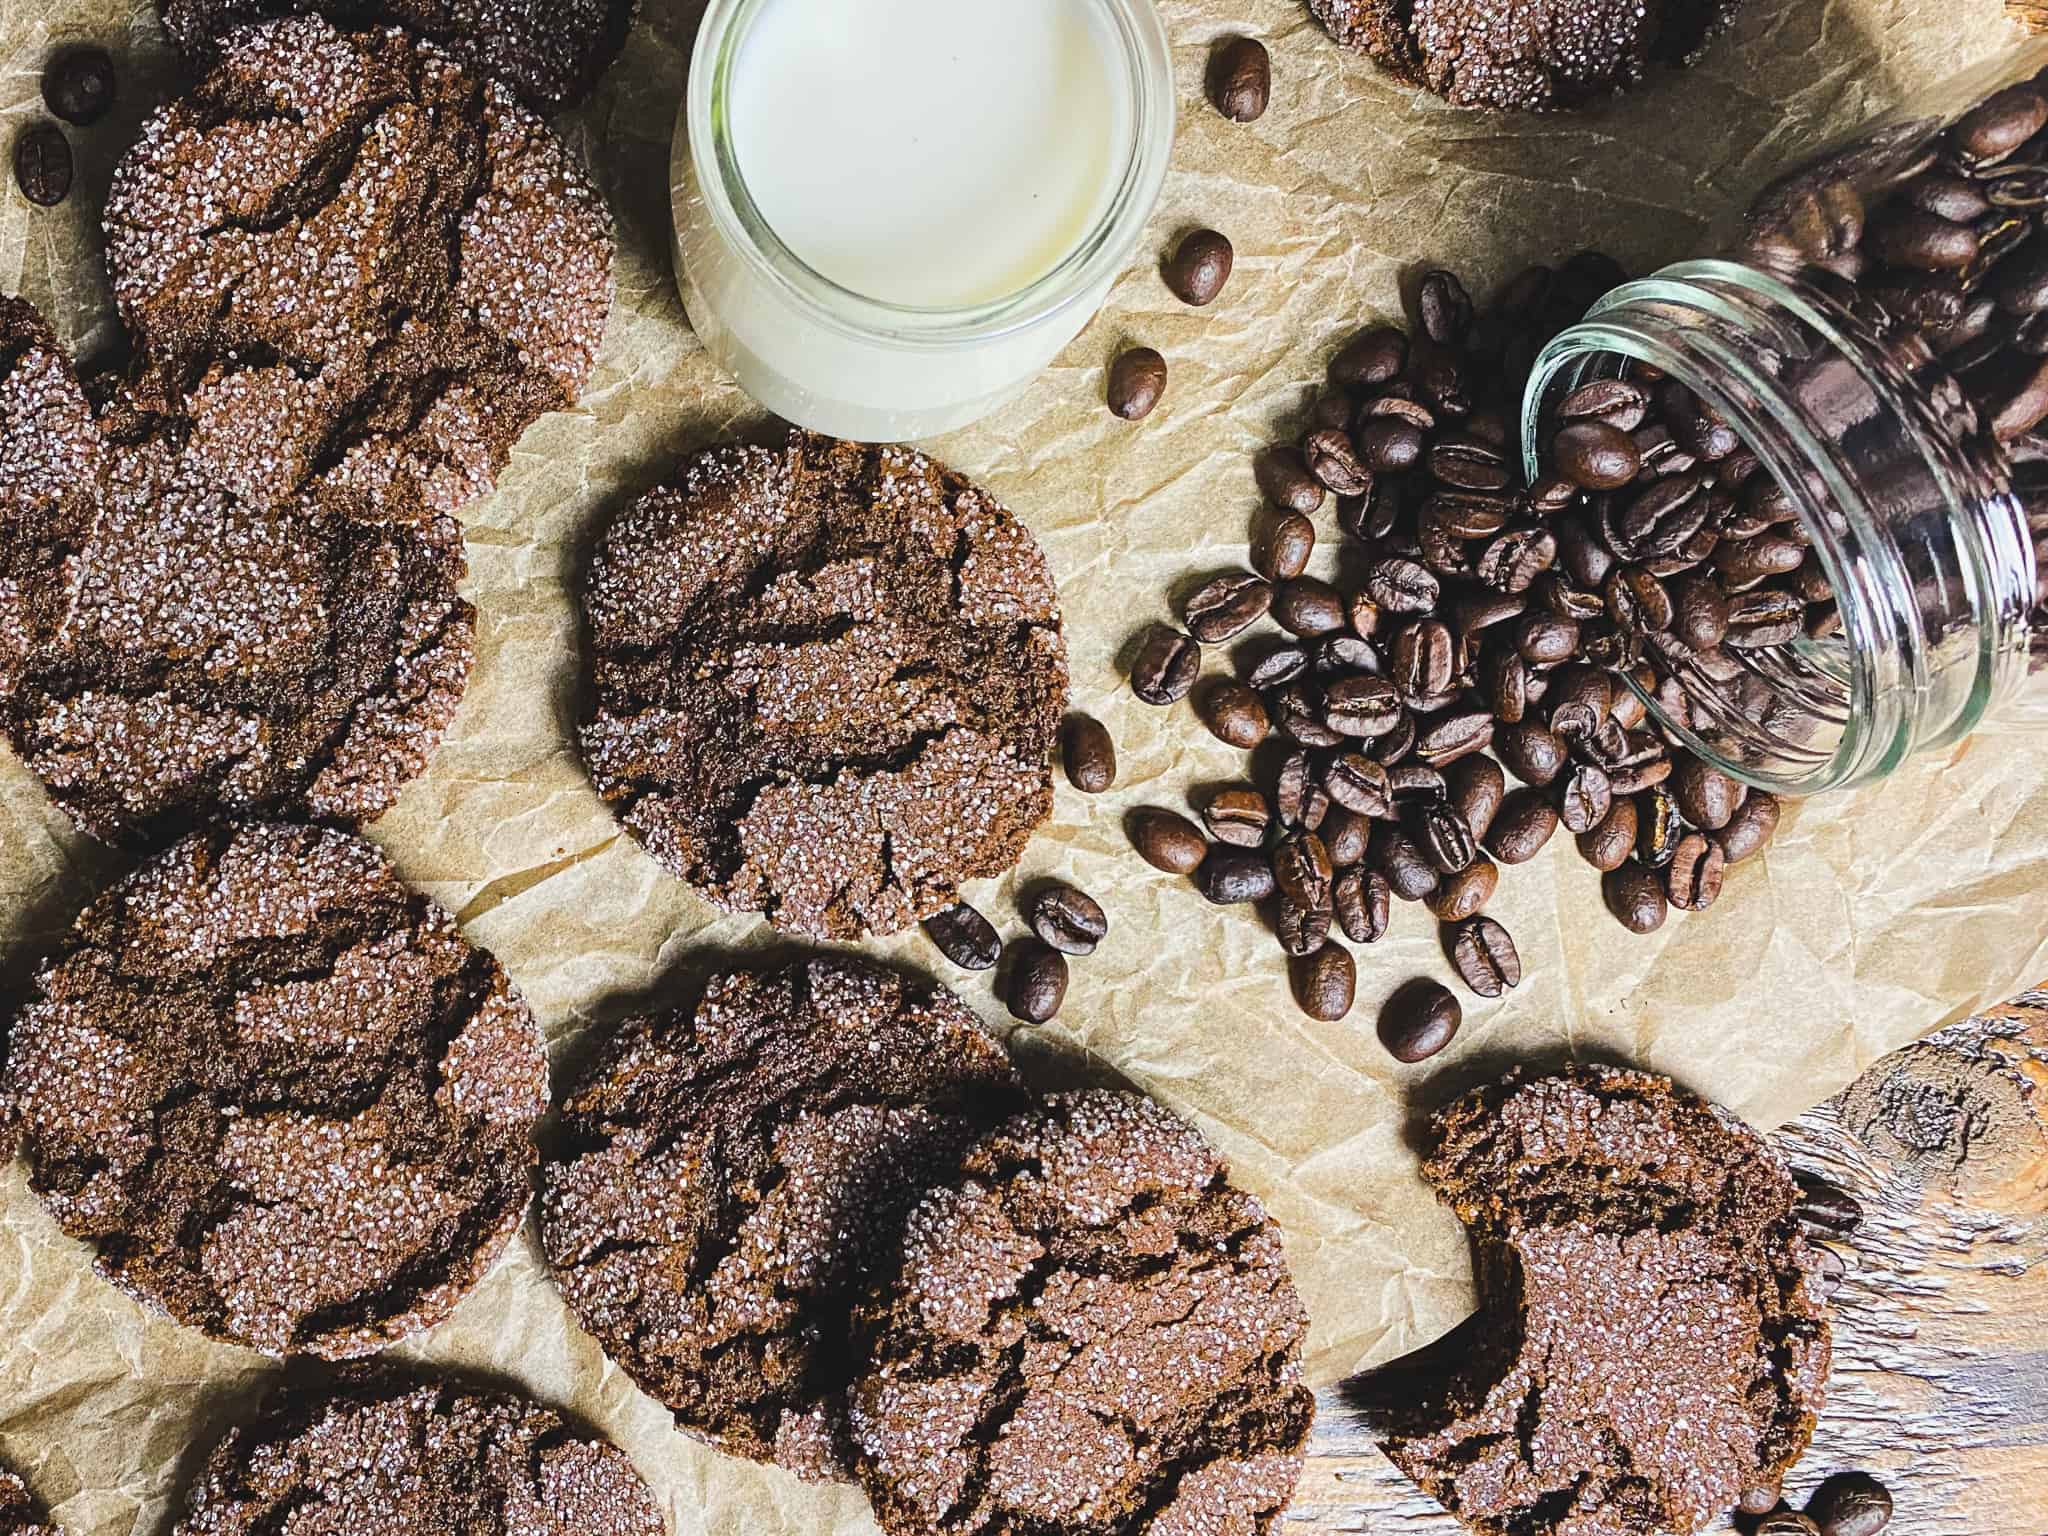 Chocolate Espresso Cookies